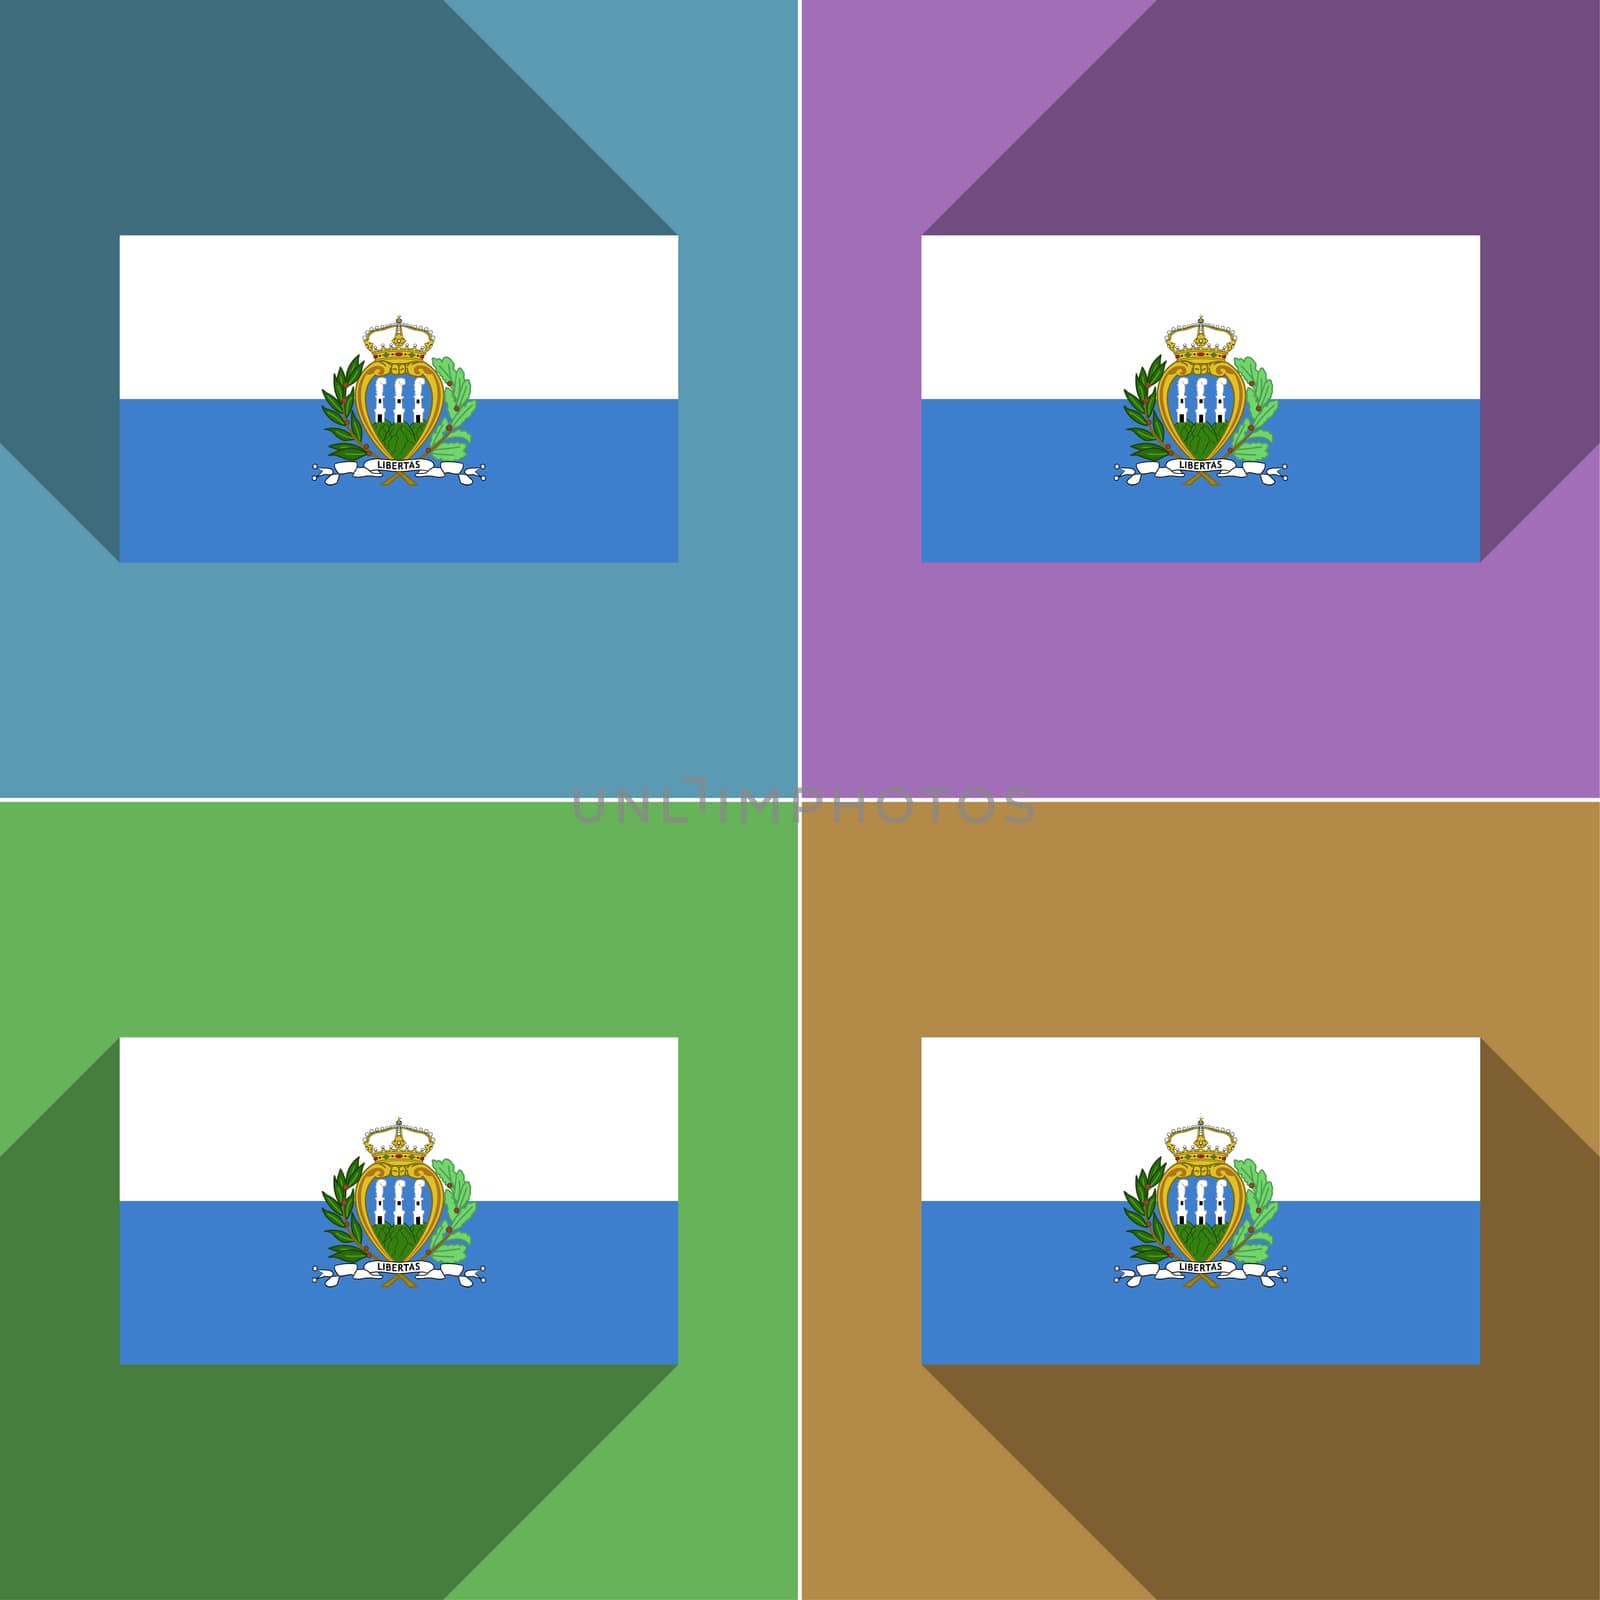 Flags of San Marino. Set of colors flat design and long shadows.  illustration